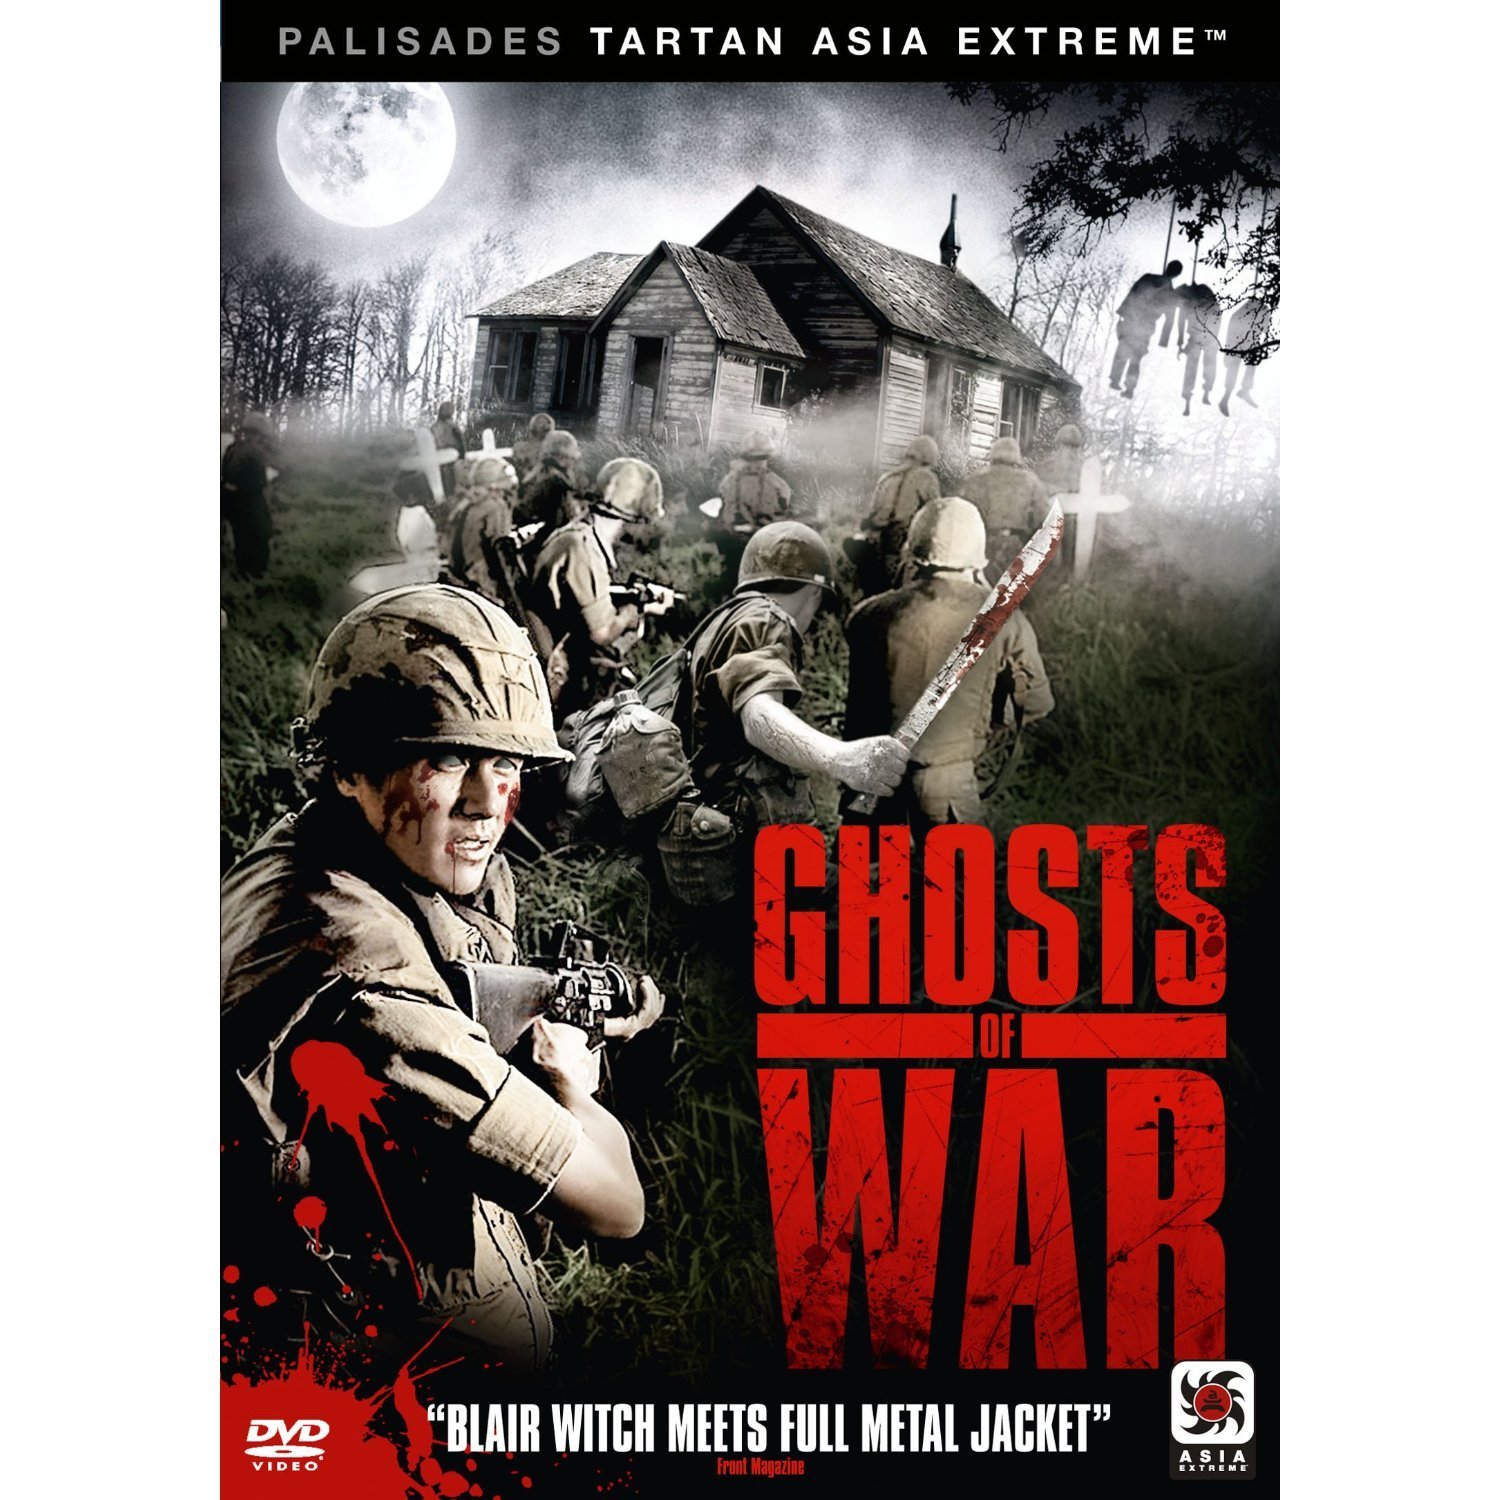 Ghosts of War DVD